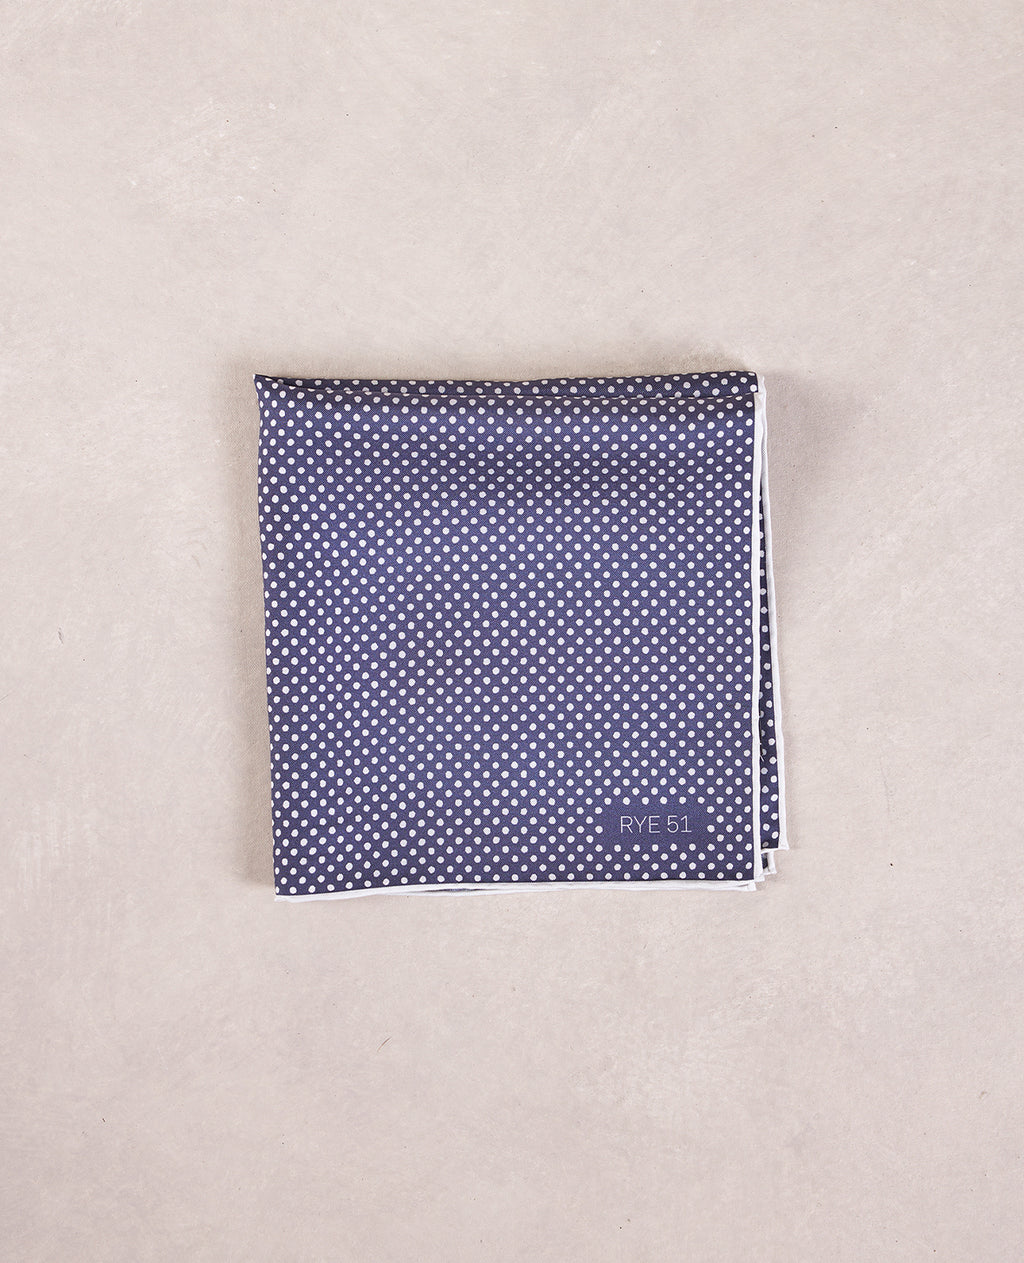 The Silk Pocket Square - 100% Silk Pocket Square - Navy w/ White Polka Dot